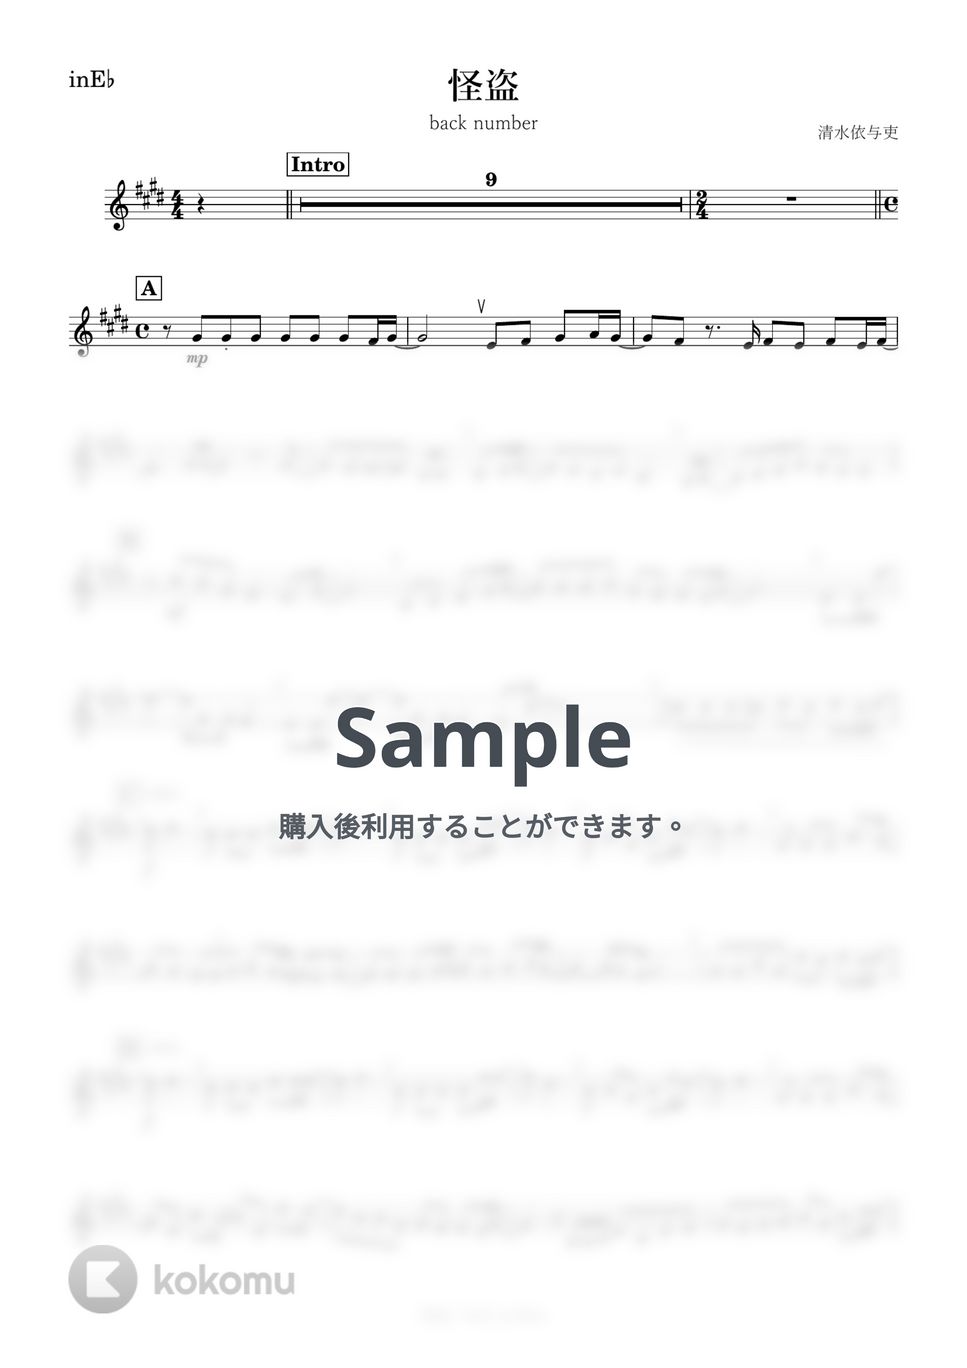 back number - 怪盗 (E♭) by kanamusic